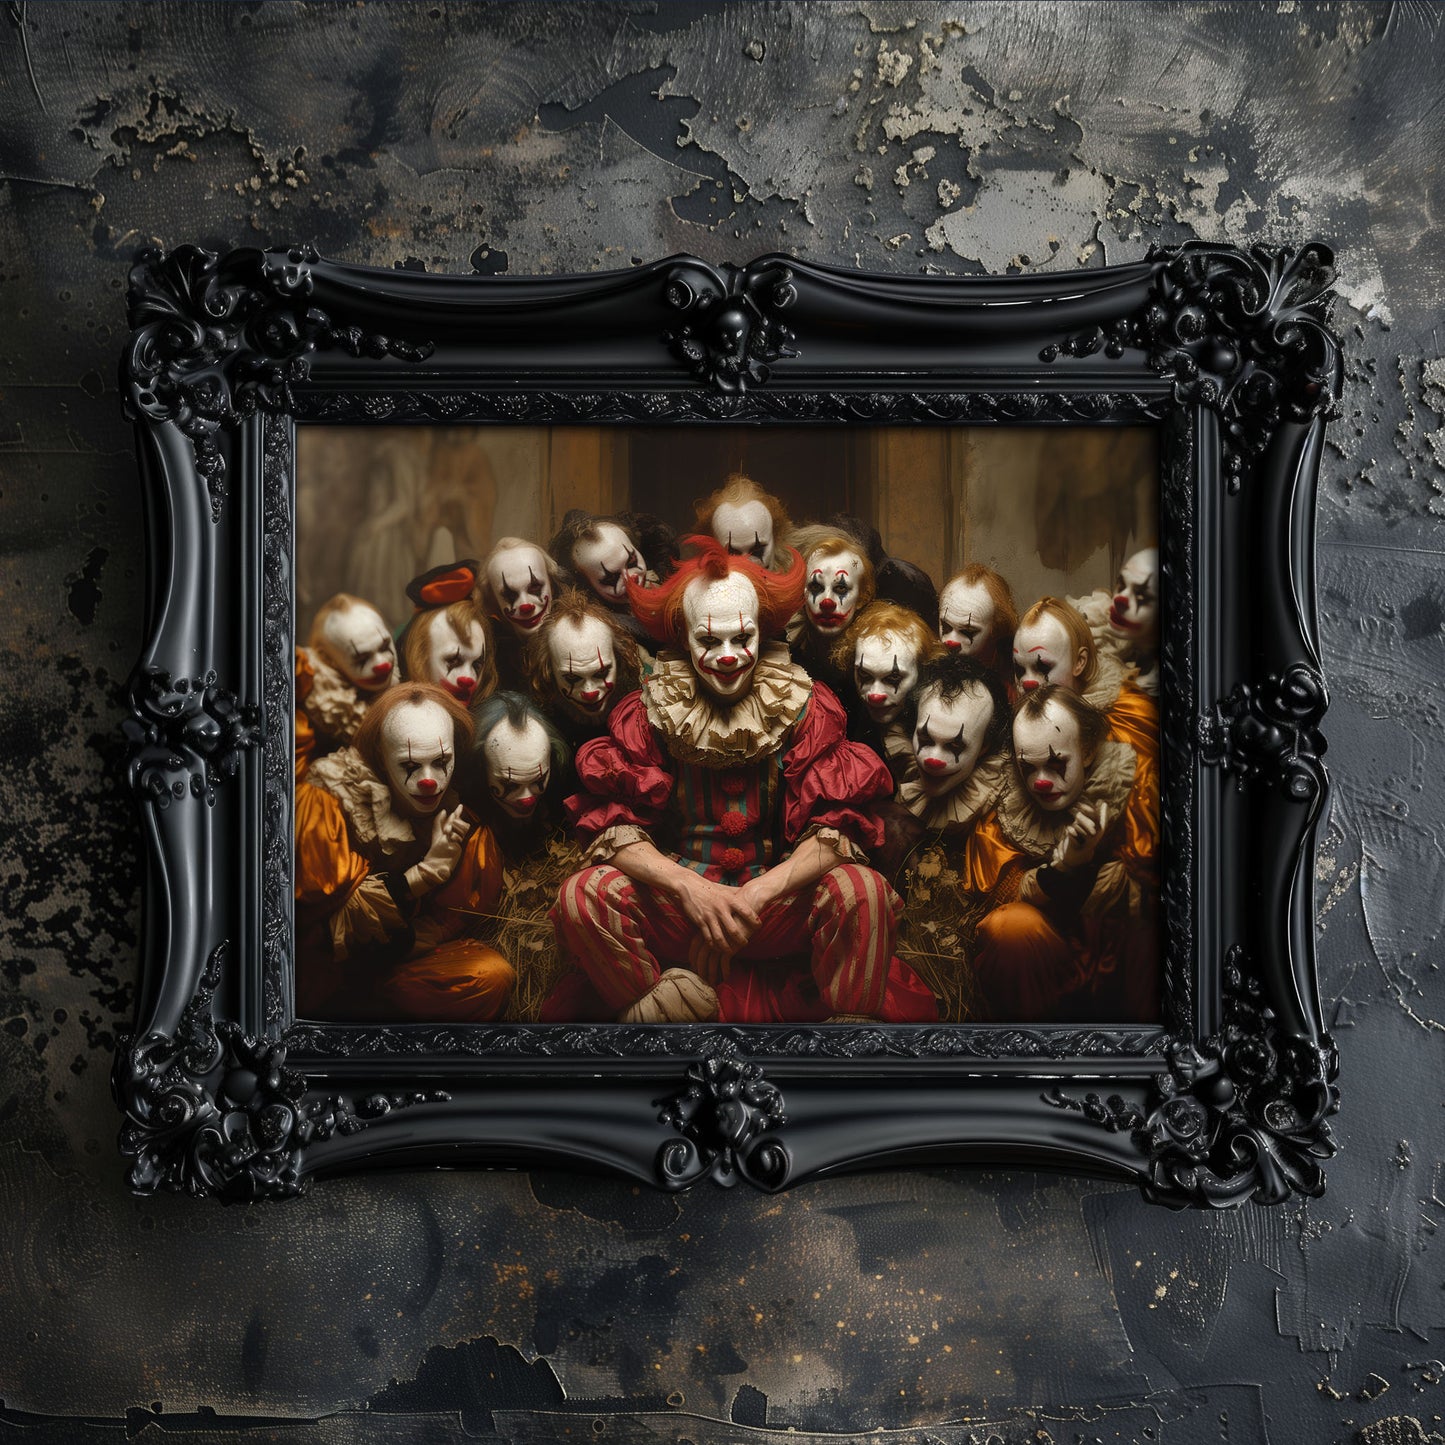 Bizarre Clown Family Poster: Creepy Clowncore Gothic Wall Art